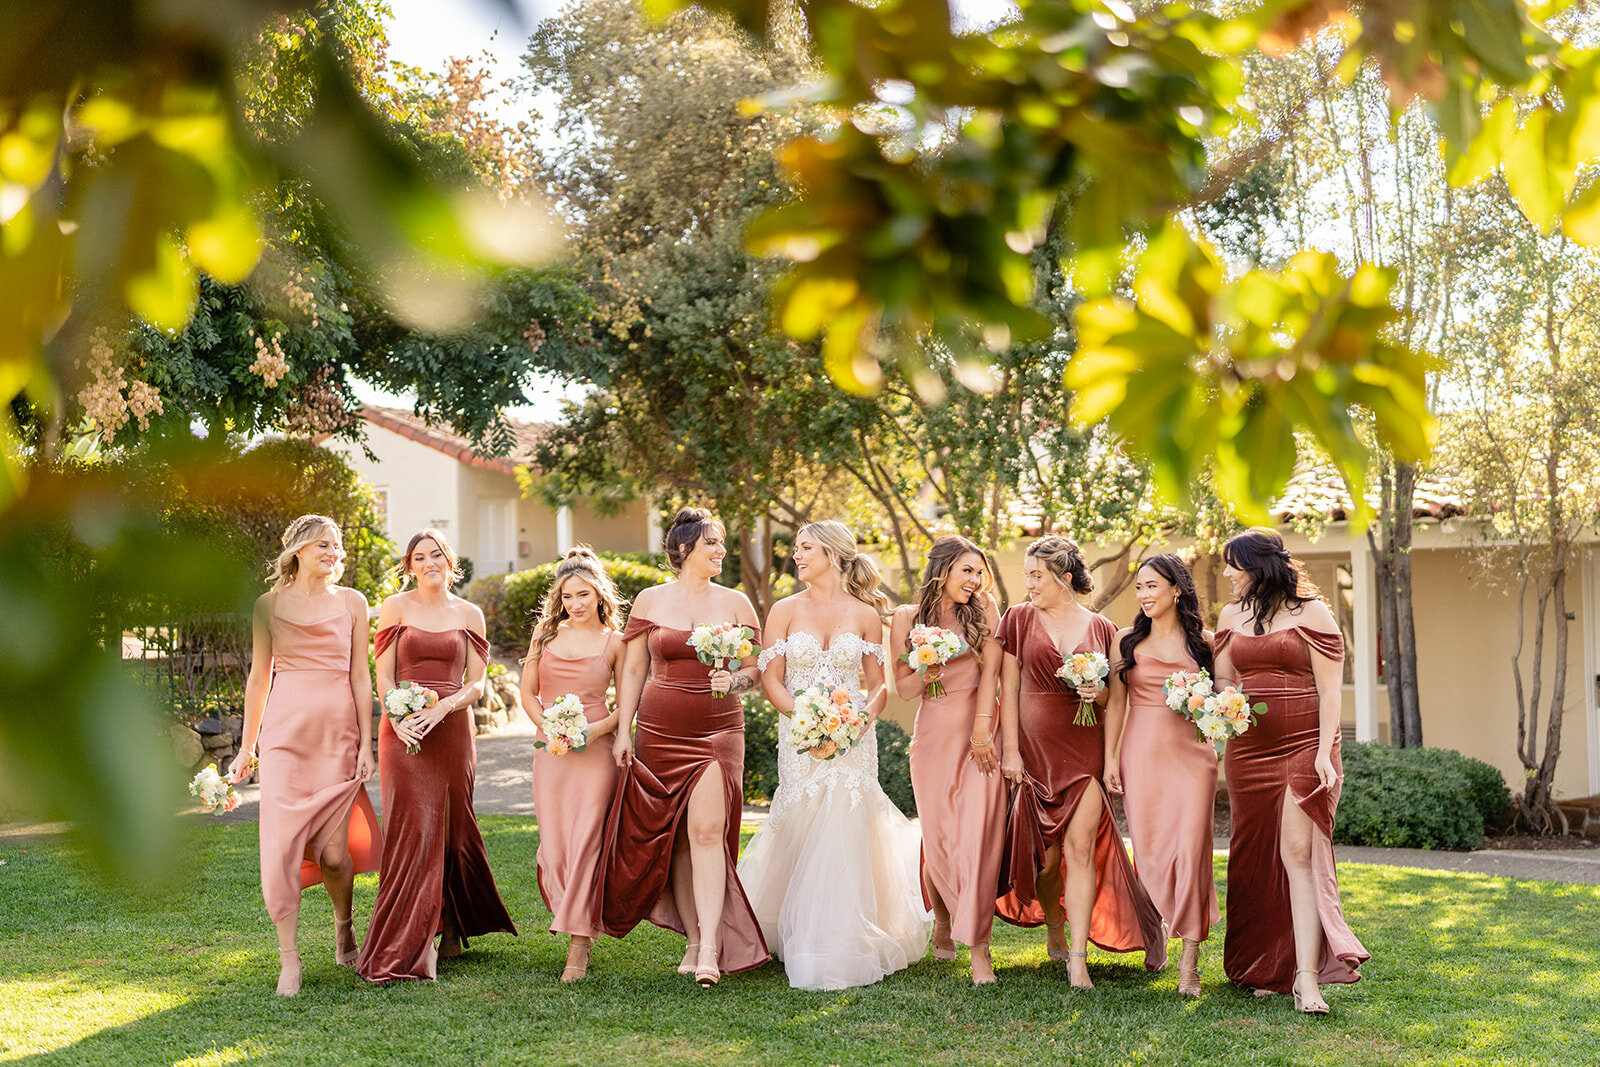 A bride and her bridesmaids walking together on a green lawn at The Inn at Rancho Santa Fe